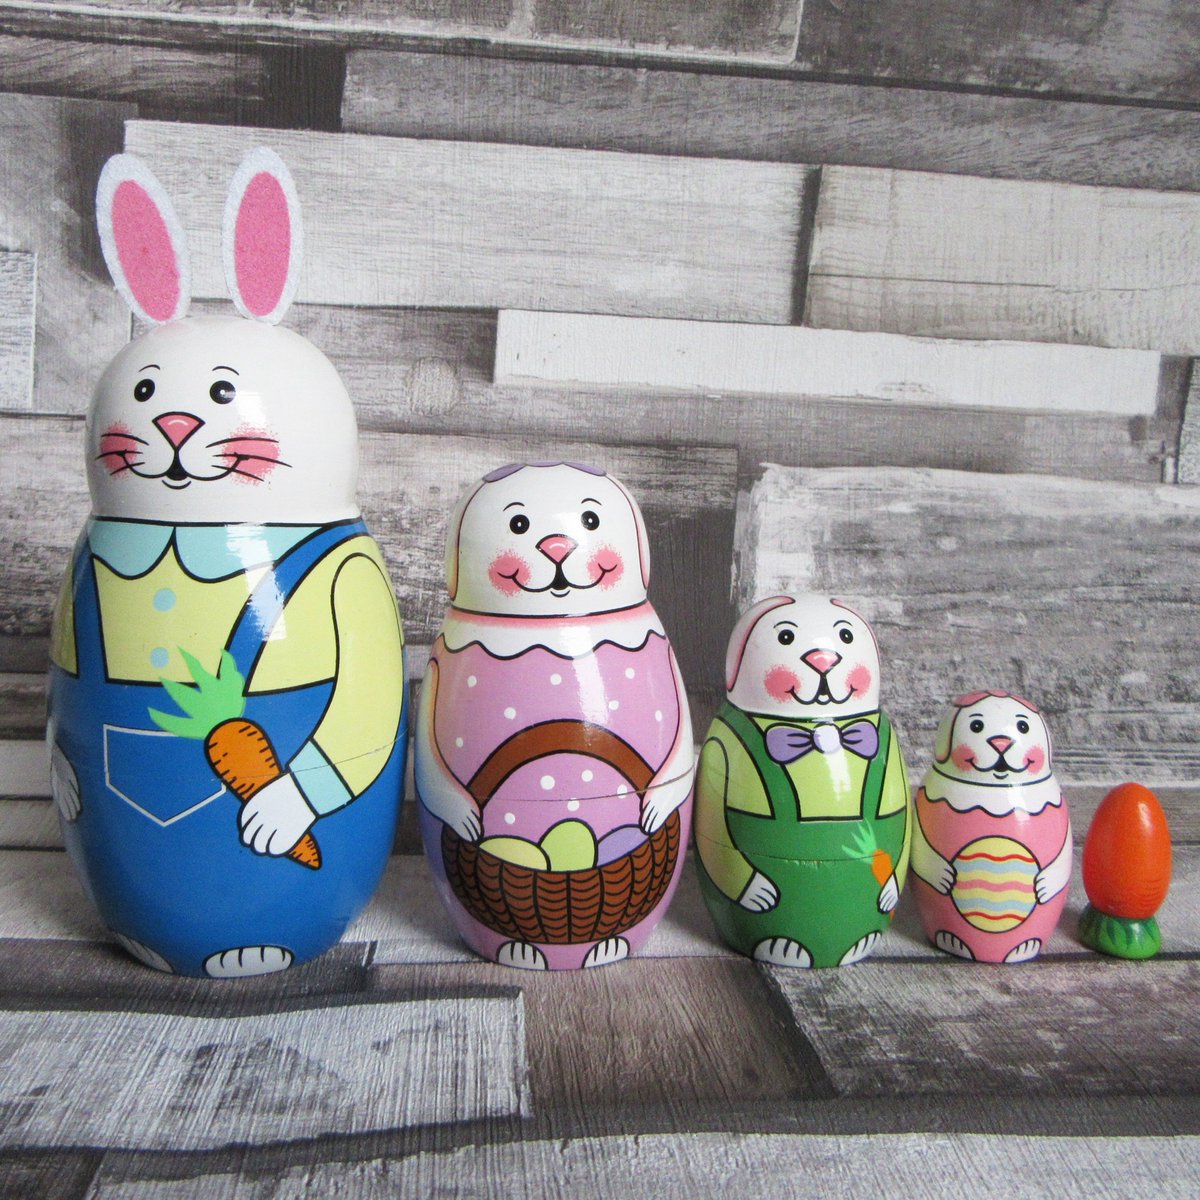 Find these cute bunnies here krasnayacrafts.etsy.com/listing/172194…… #etsyfinds #etsyhandmade #etsystore #easy #nestingdolls #bunny #bunnies #bunnyrabbit #rabbit #cute #giftideas #shopindie #earlybiz